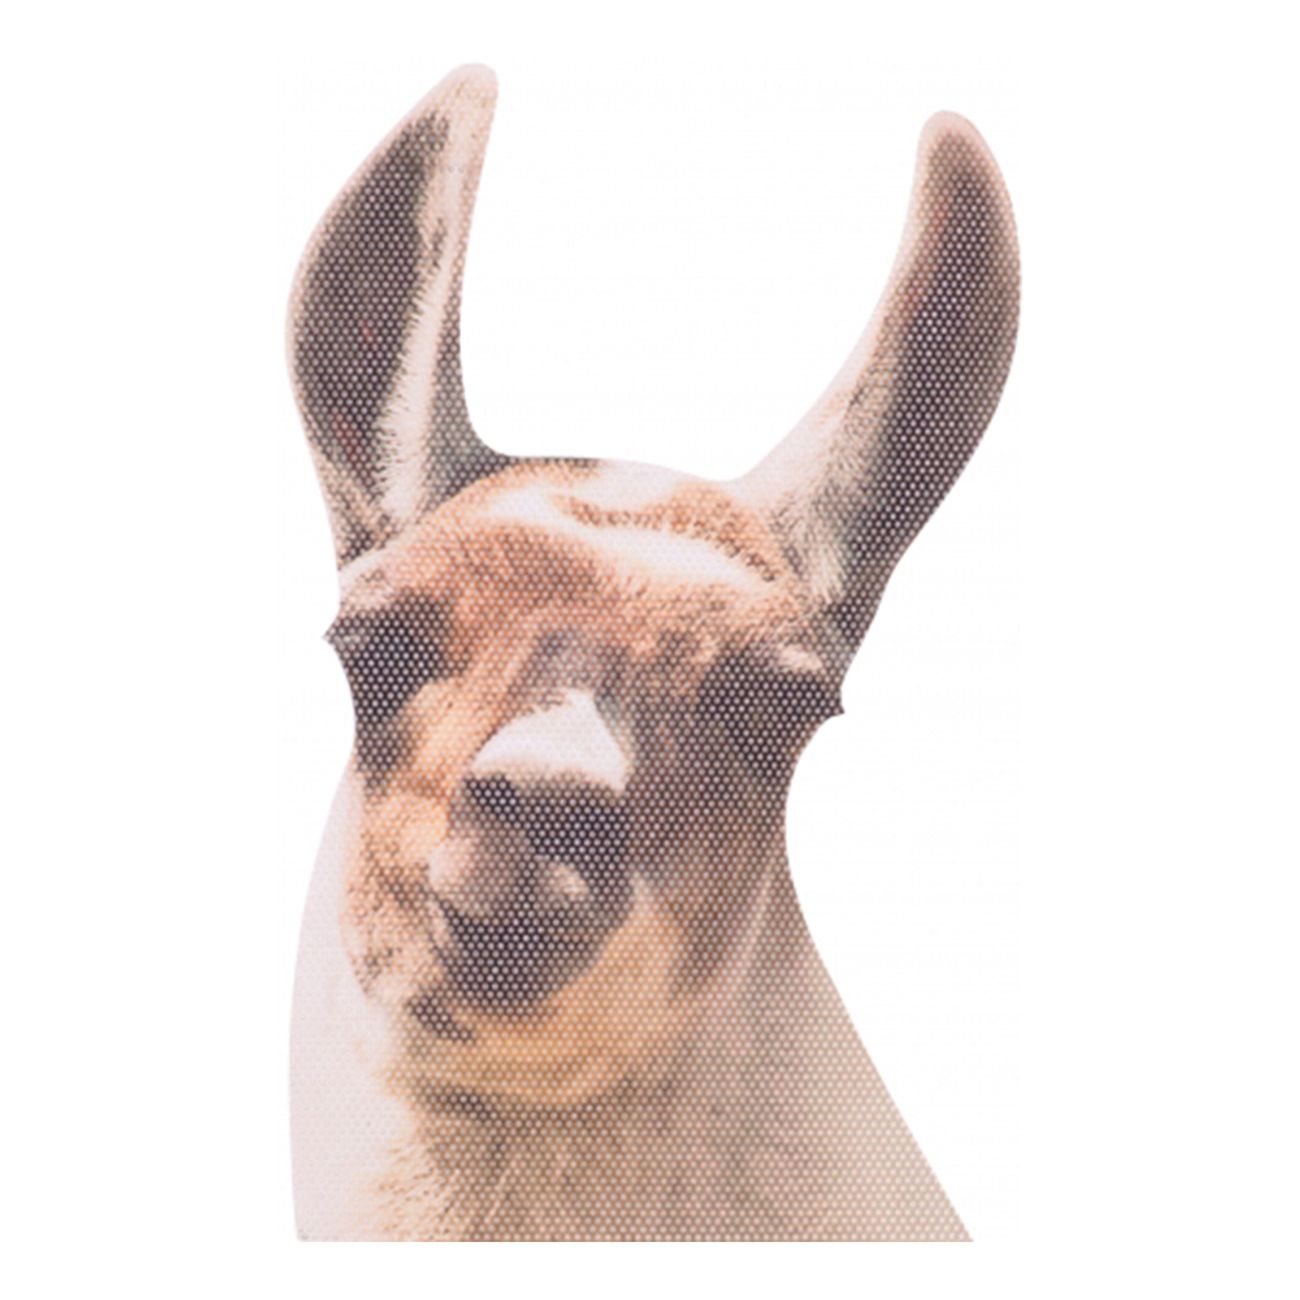 bilklistermarke-llama-2